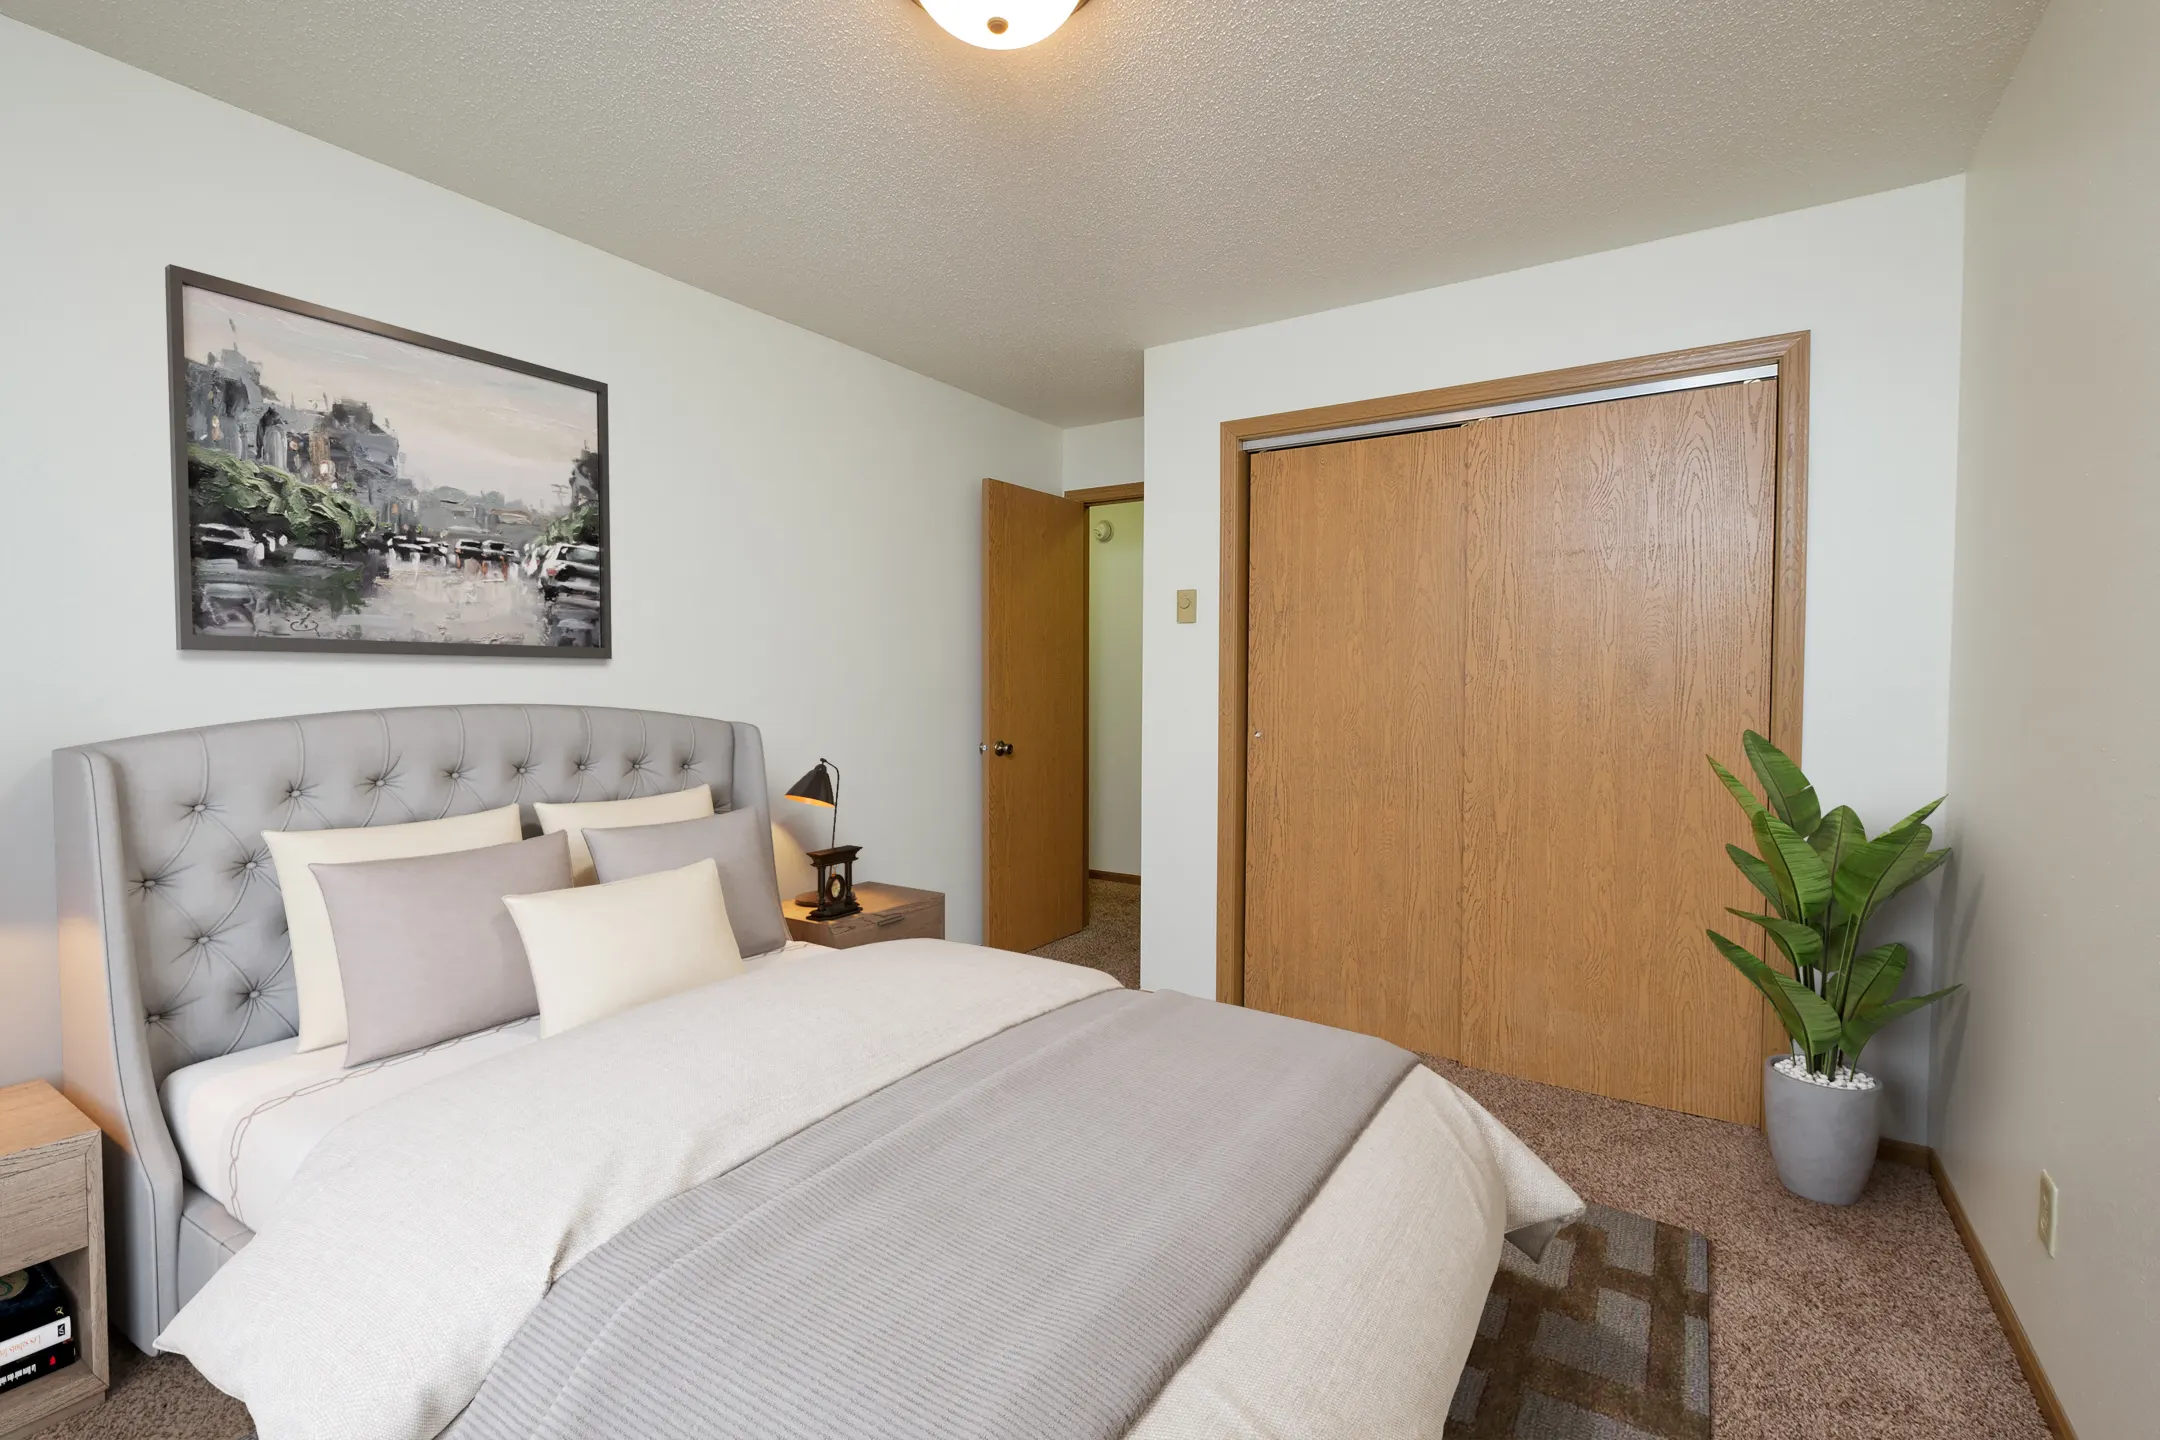 Bedroom - Luxford Court Apartment Community - Fargo, ND